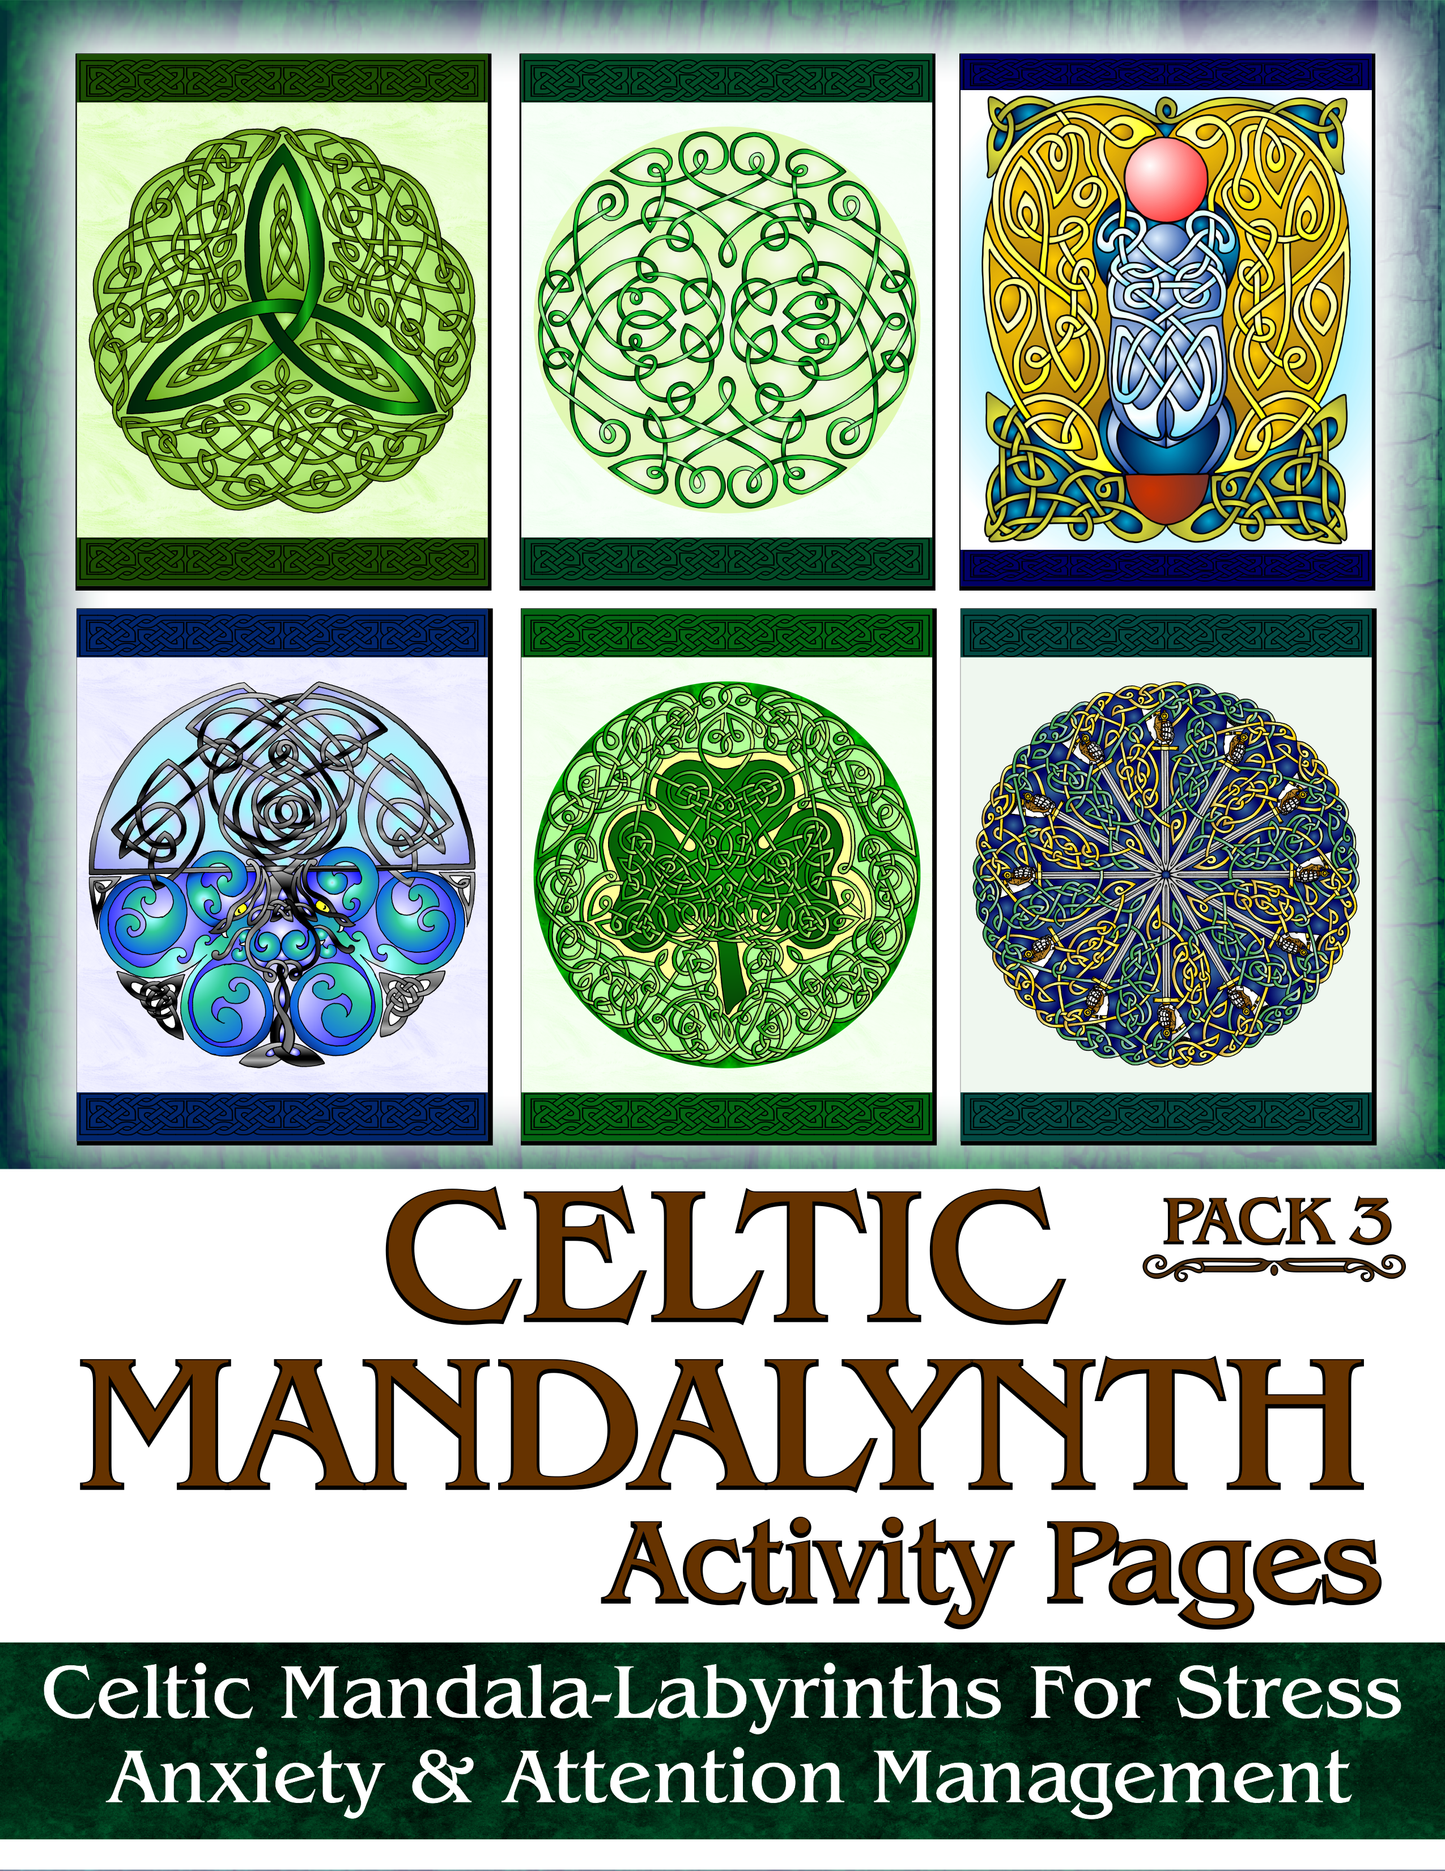 celtic,celticart,celtic knot, celtic knotwork,knotwork,irish,scottish,welsh,celtica,gealic,gael,trinity,triquetra,cross,celtic cross,celtic trinity